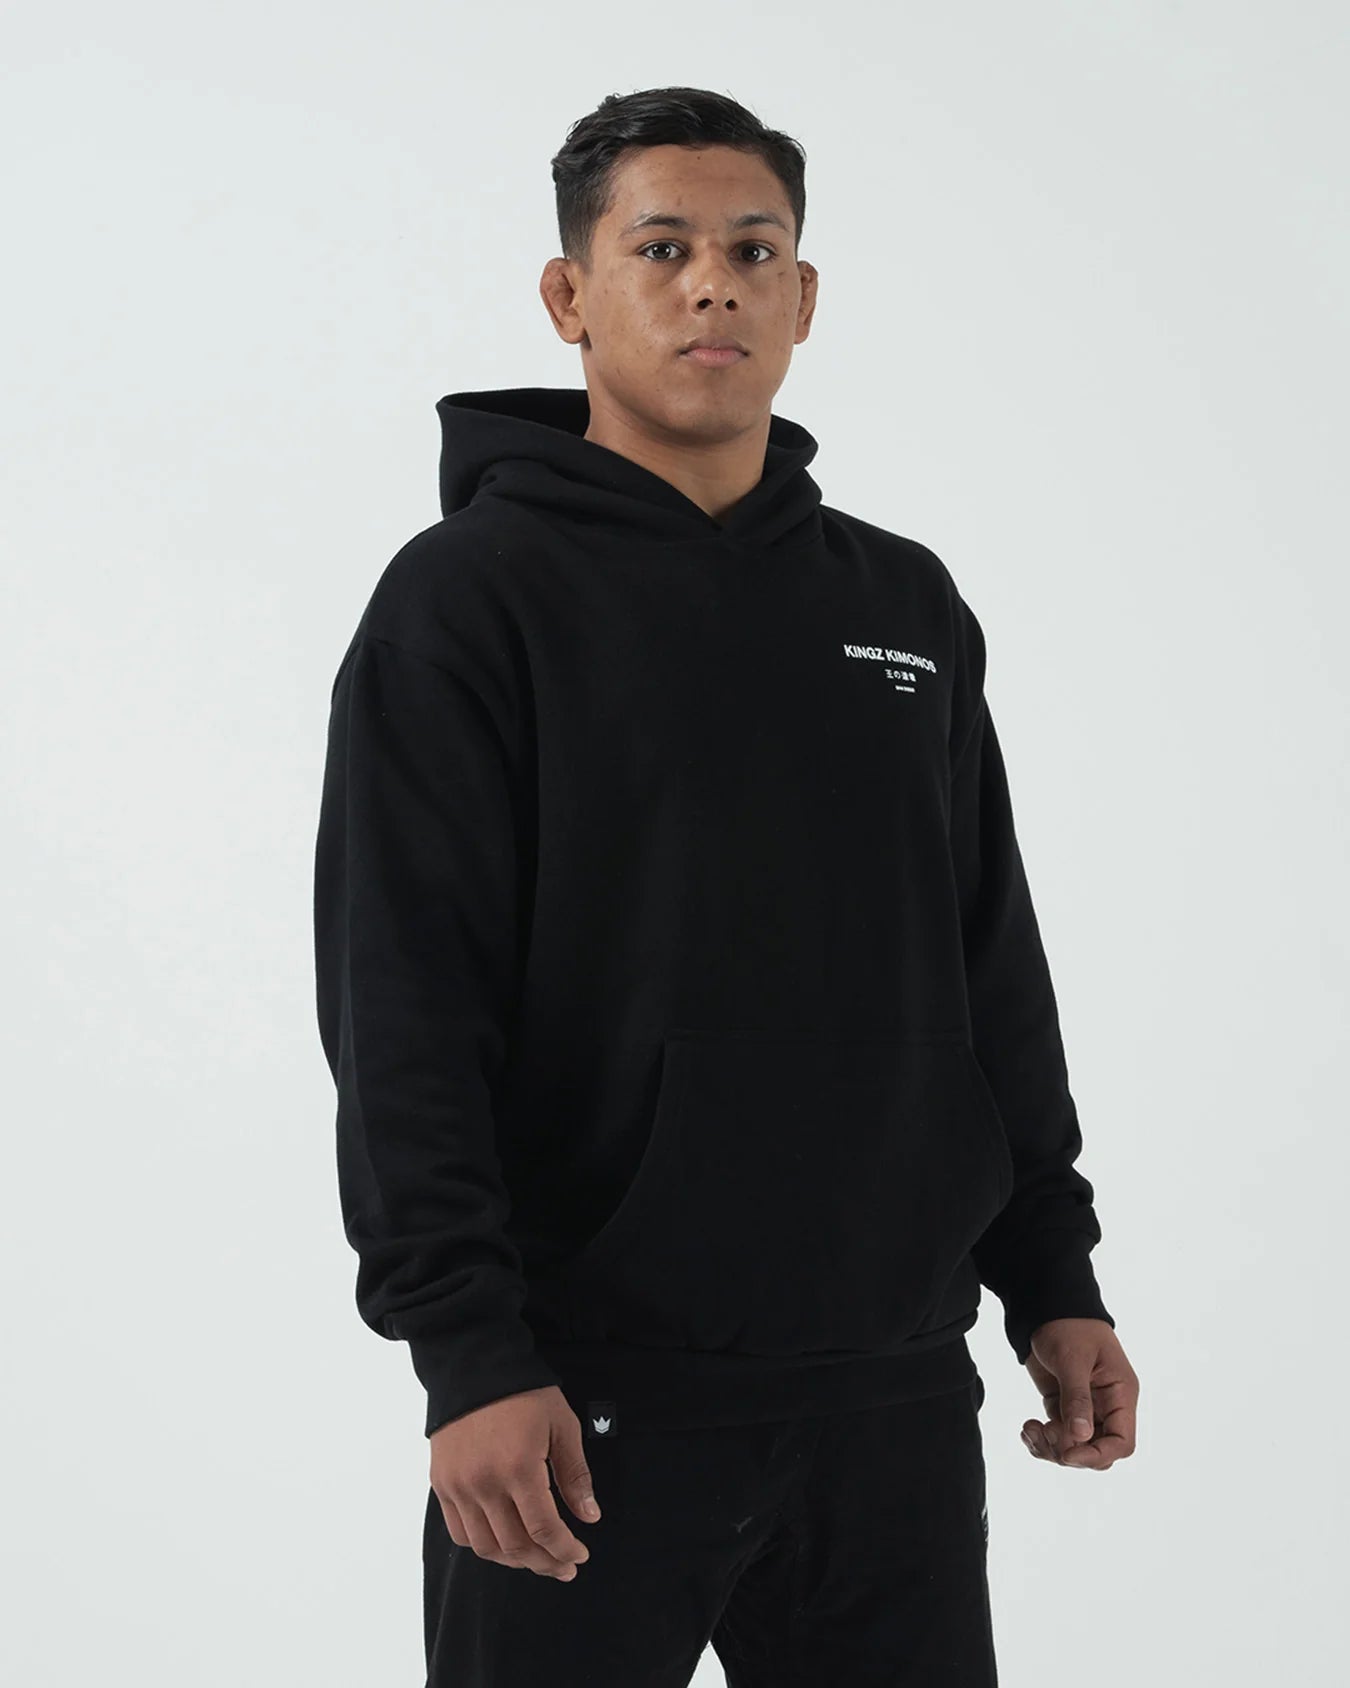 HQ Hooded Sweatshirt 黒　XL